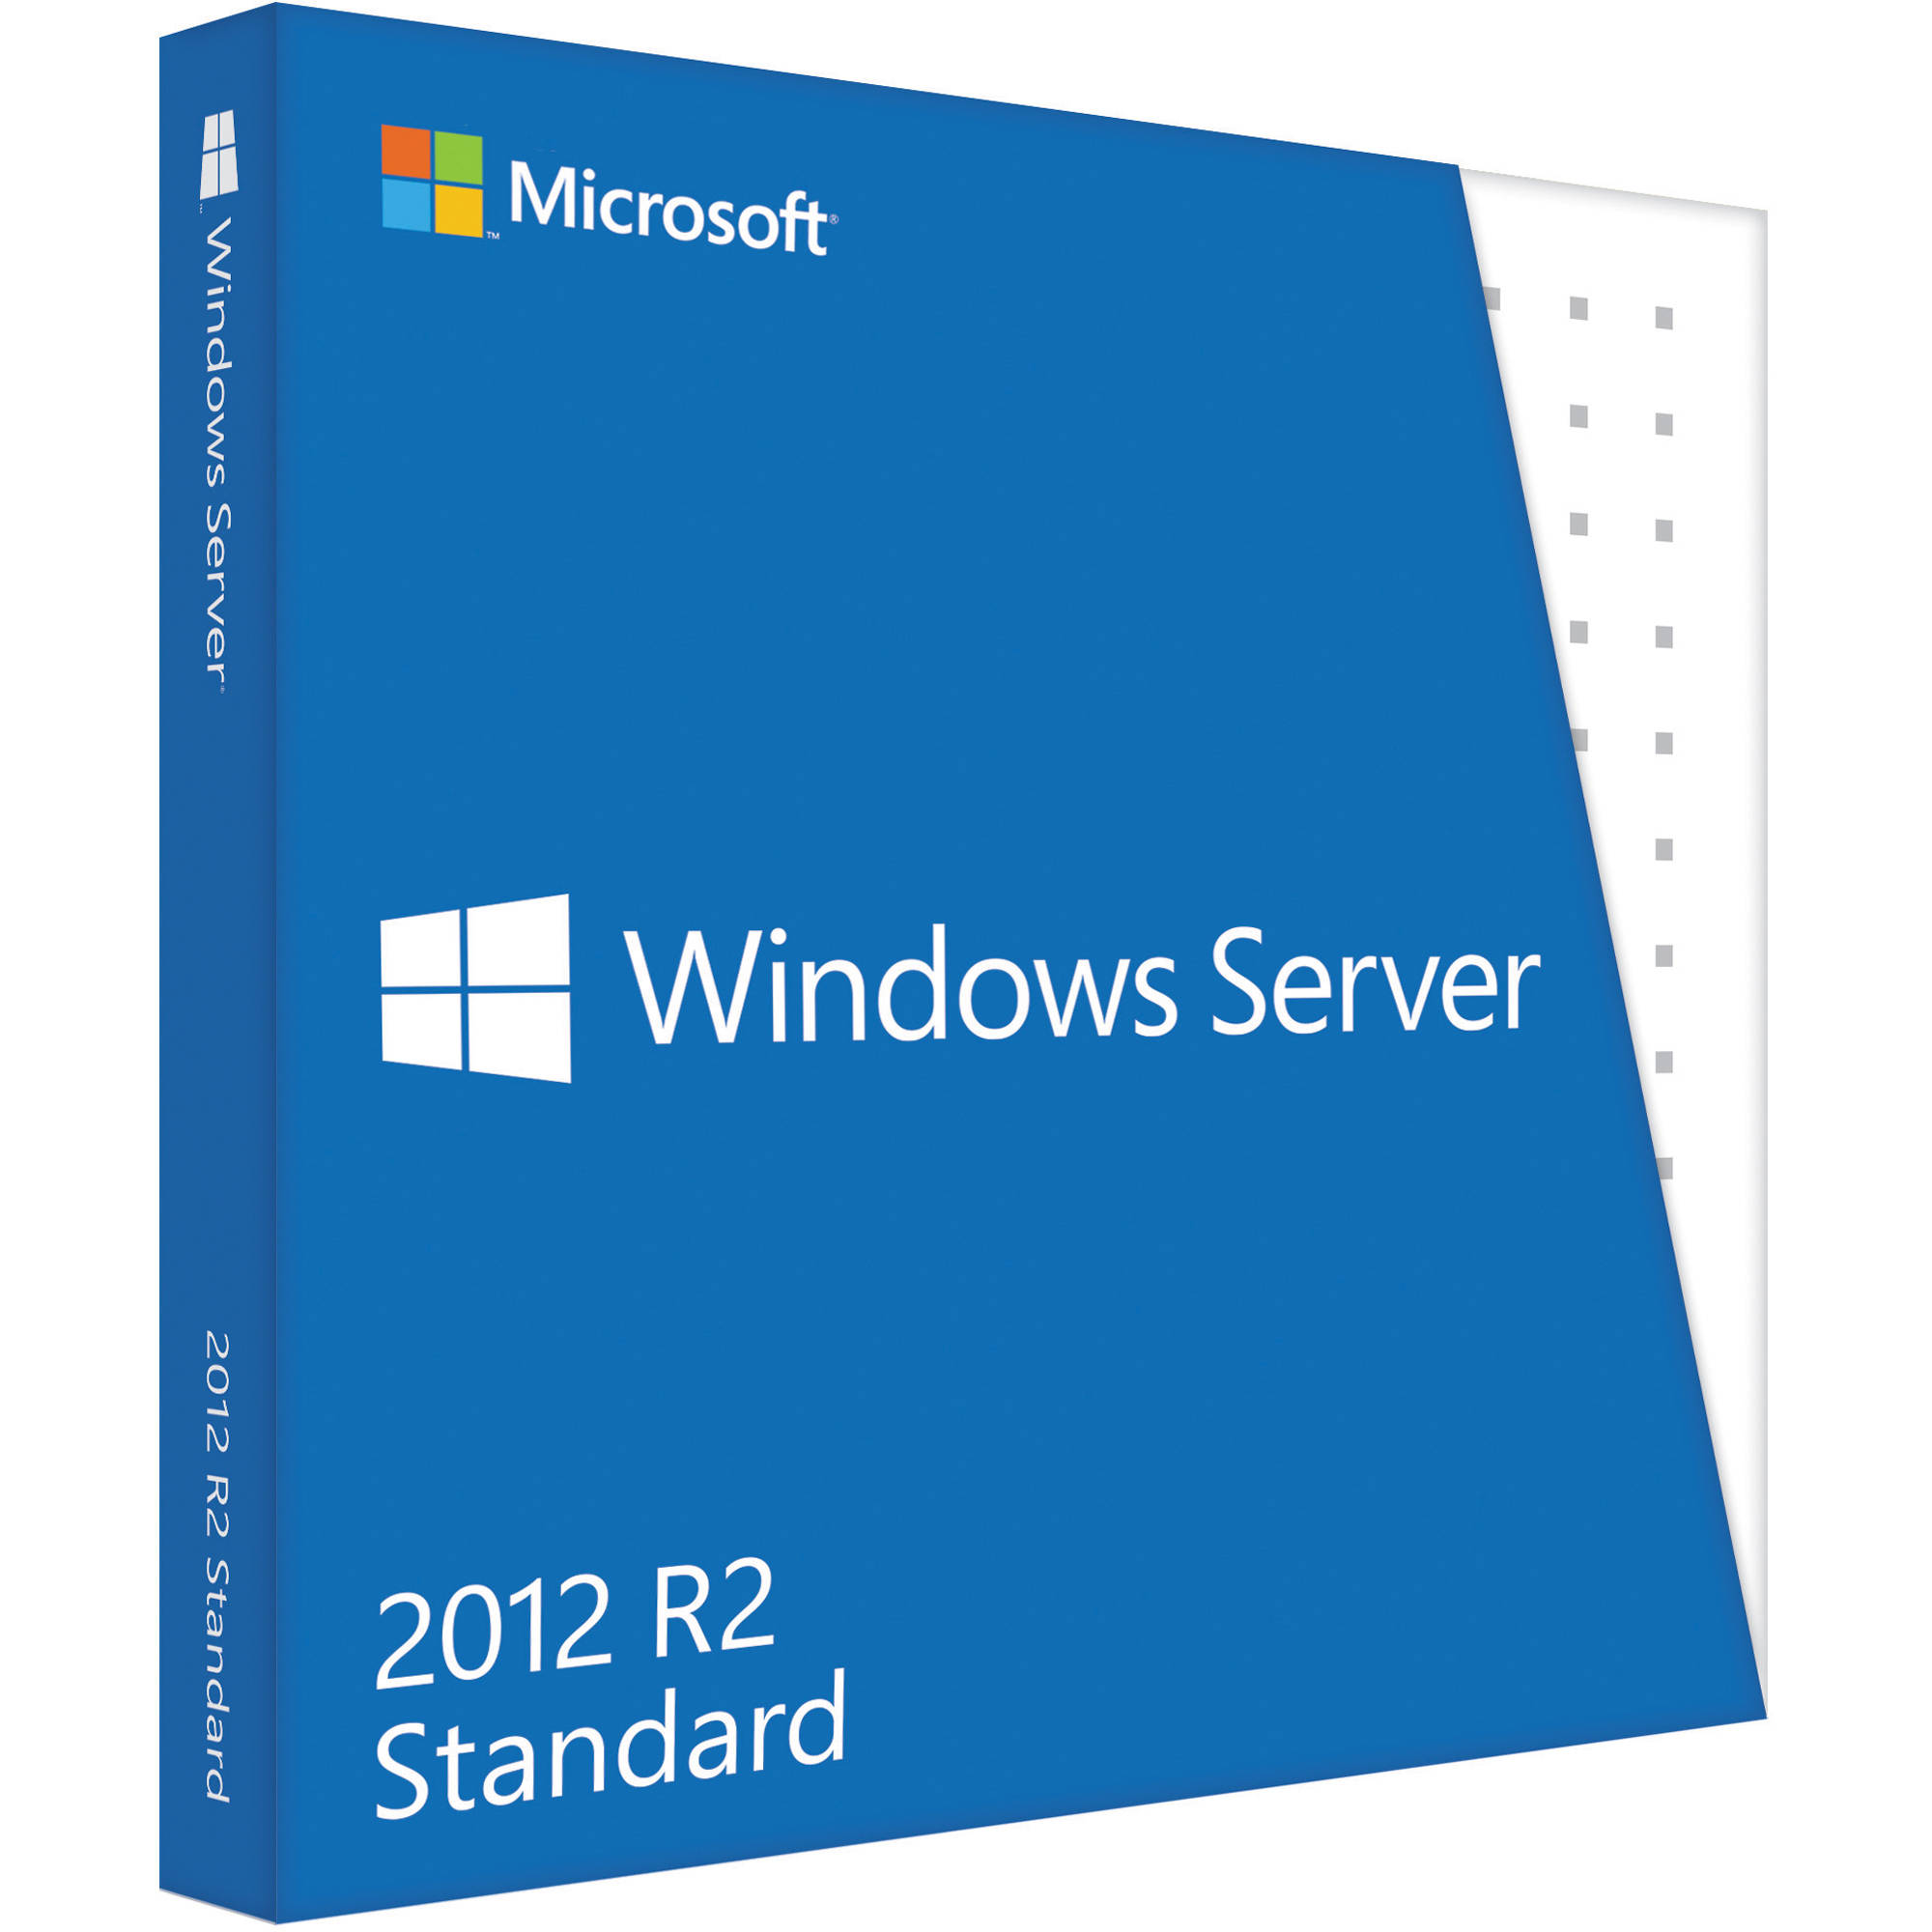 Windows server 2008 r2 iso download